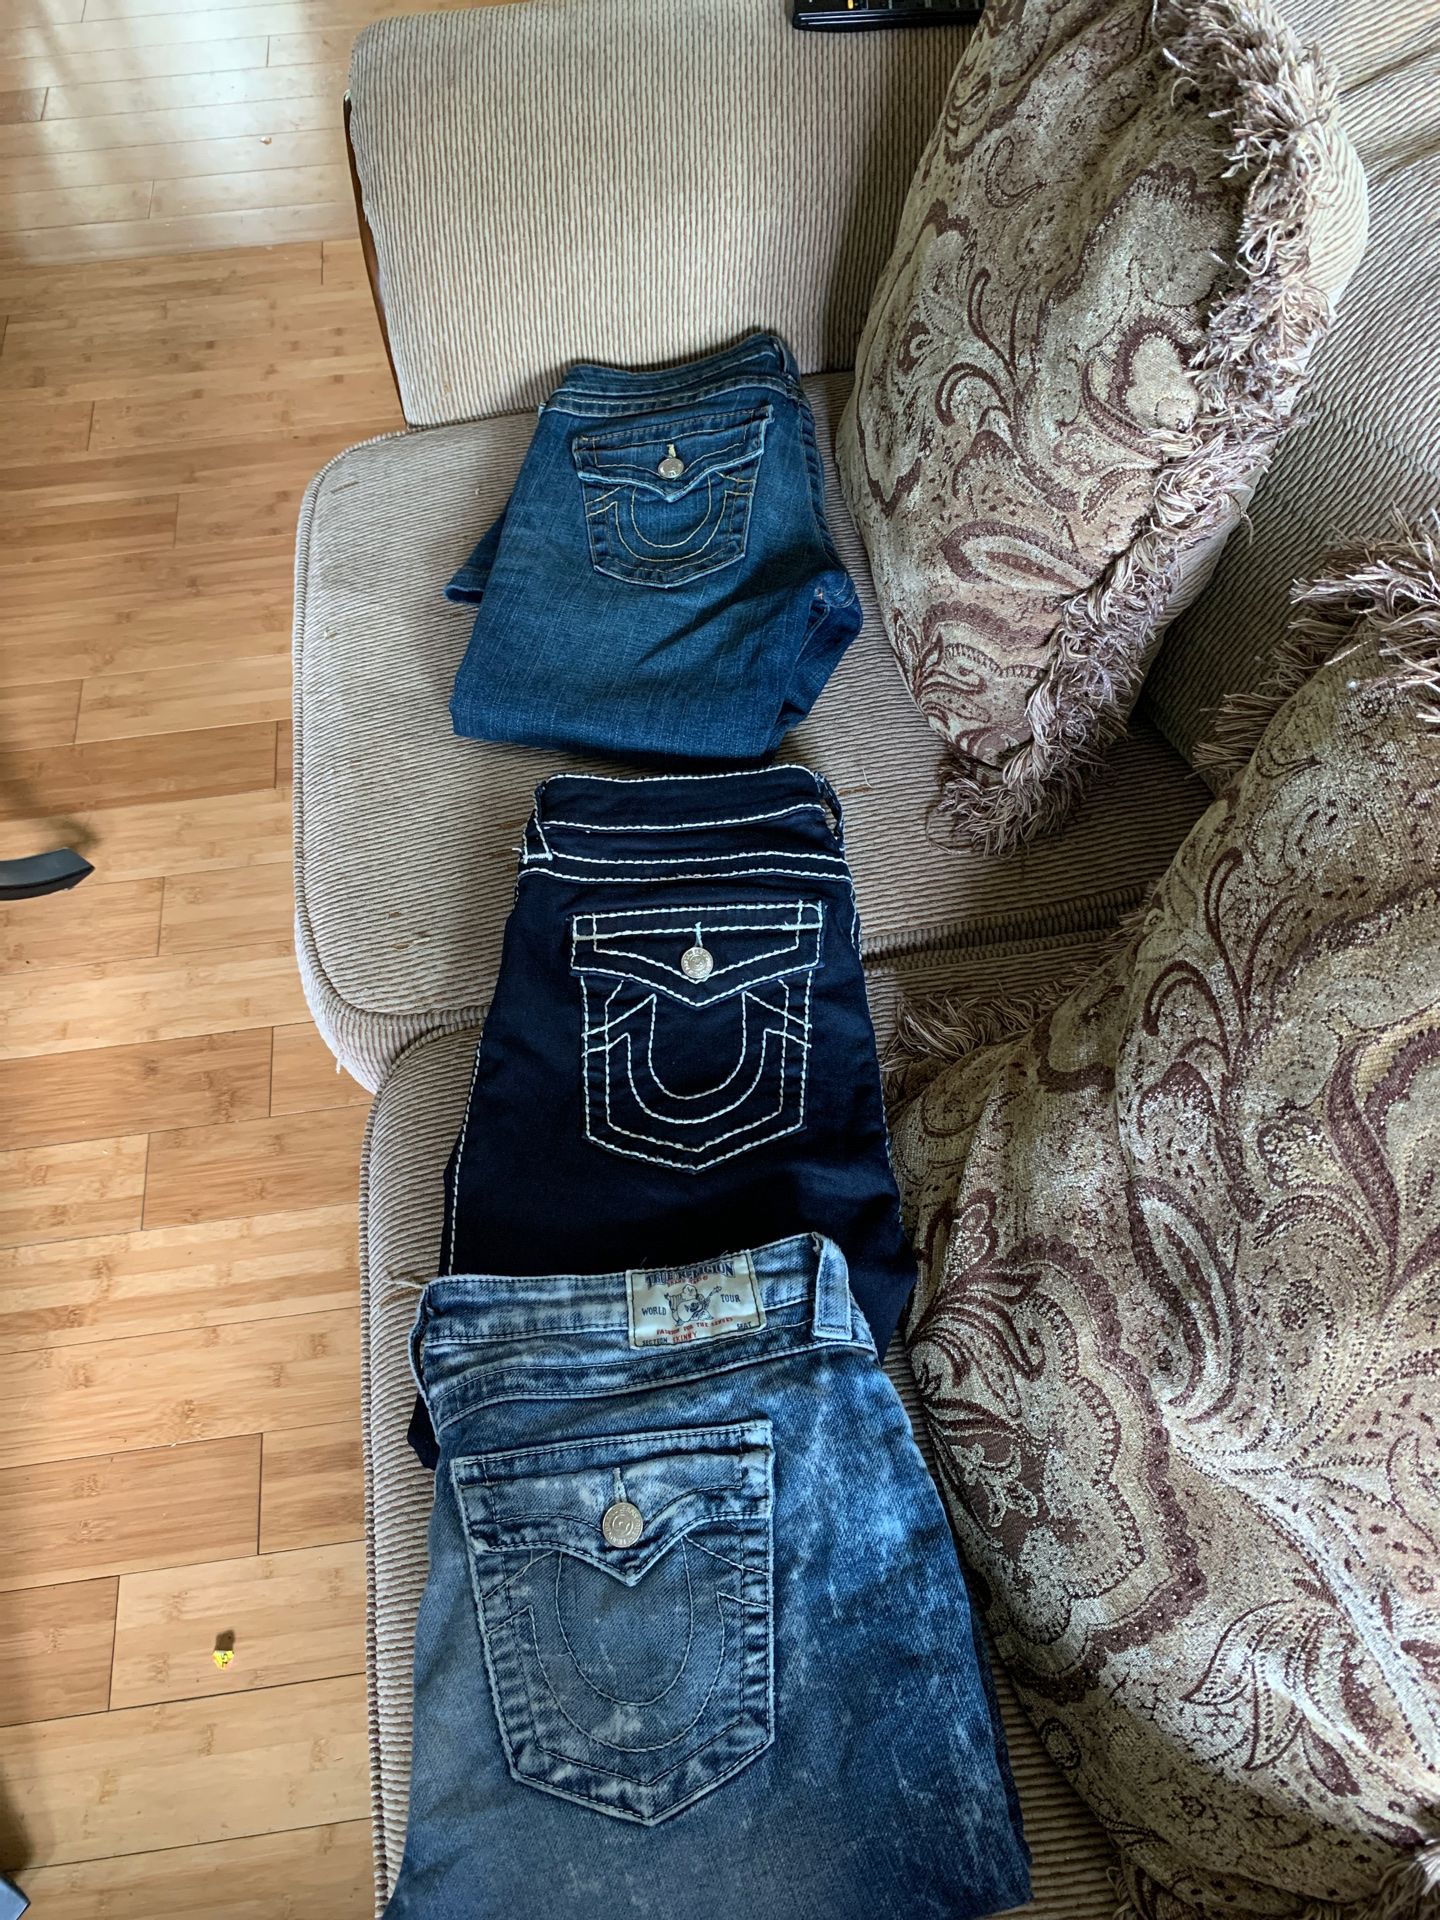 True religion jeans size 29-31